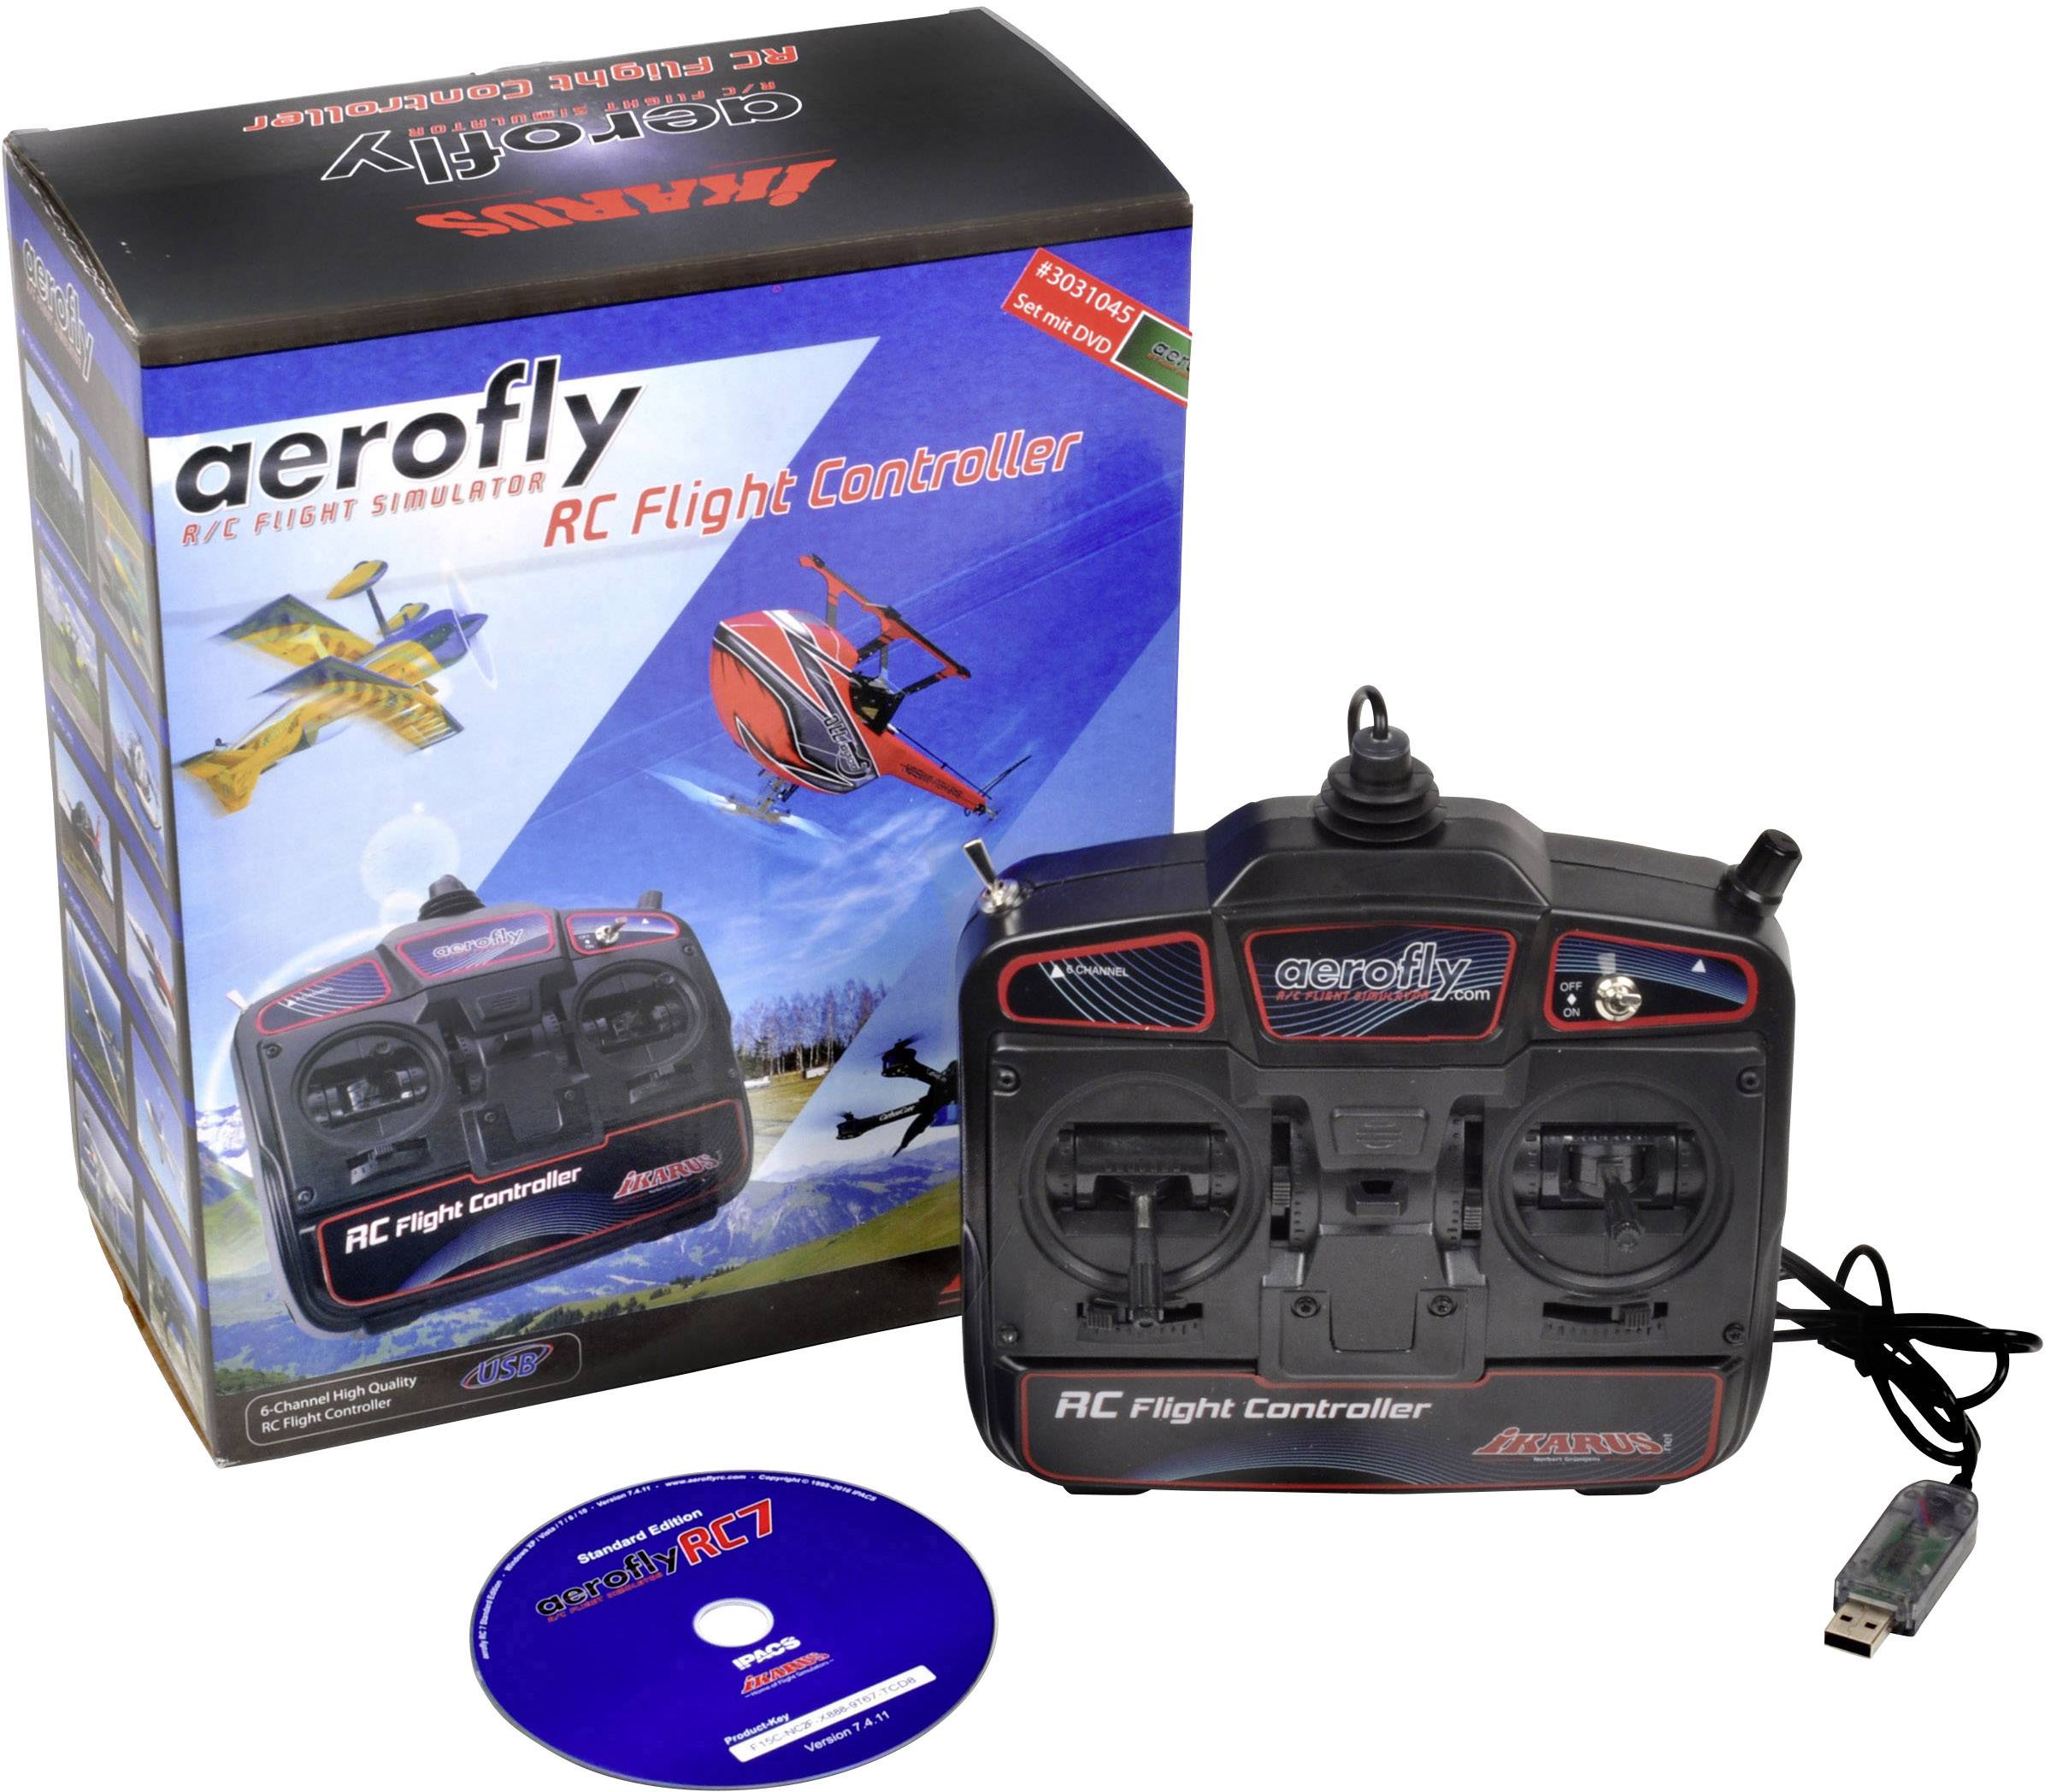 aerofly rc 7 playstation 3 controller